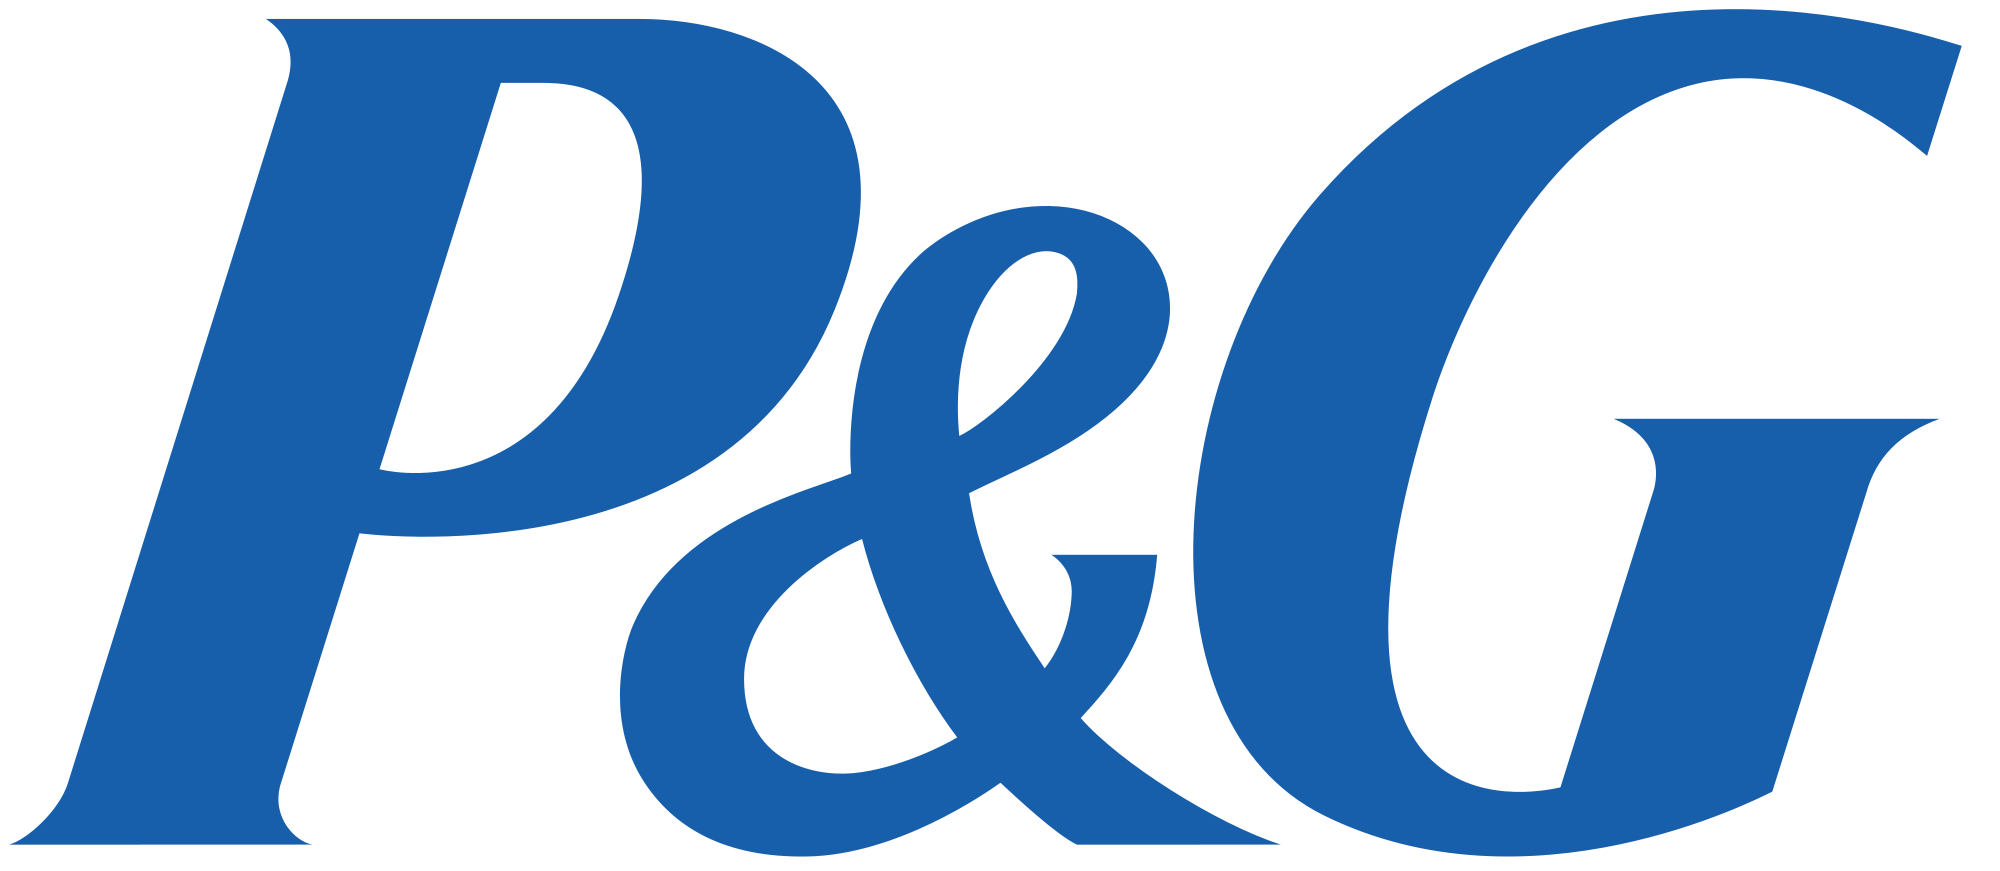 P&G full color client logo